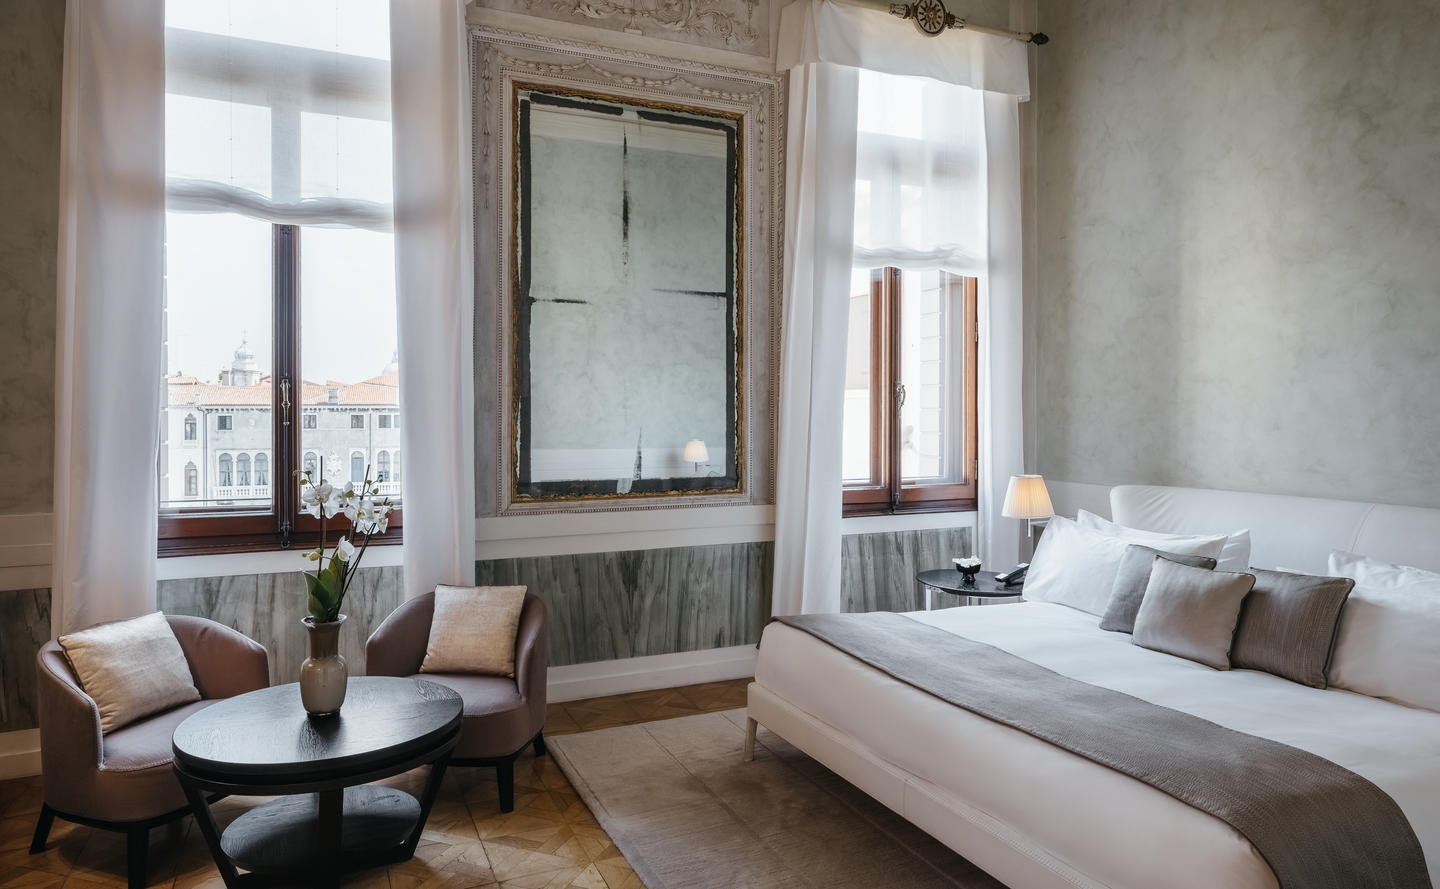 Aman Venice, Italy - Accommodation, Room 21 & 22, Coccina's Apartment